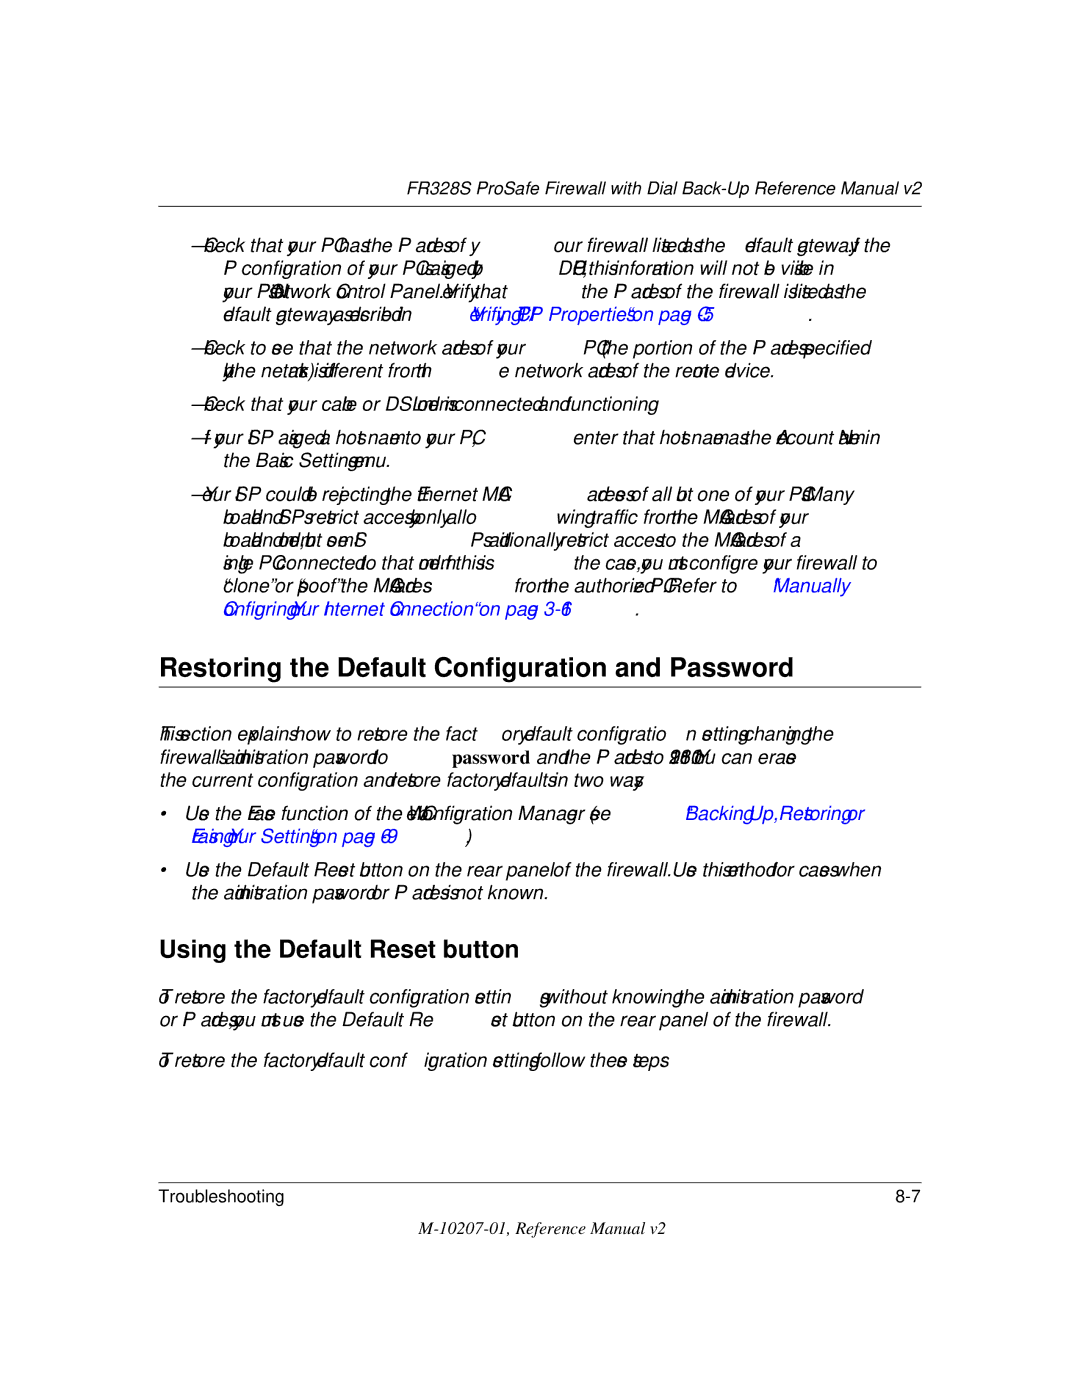 NETGEAR FR328S manual Restoring the Default Configuration and Password, Using the Default Reset button 